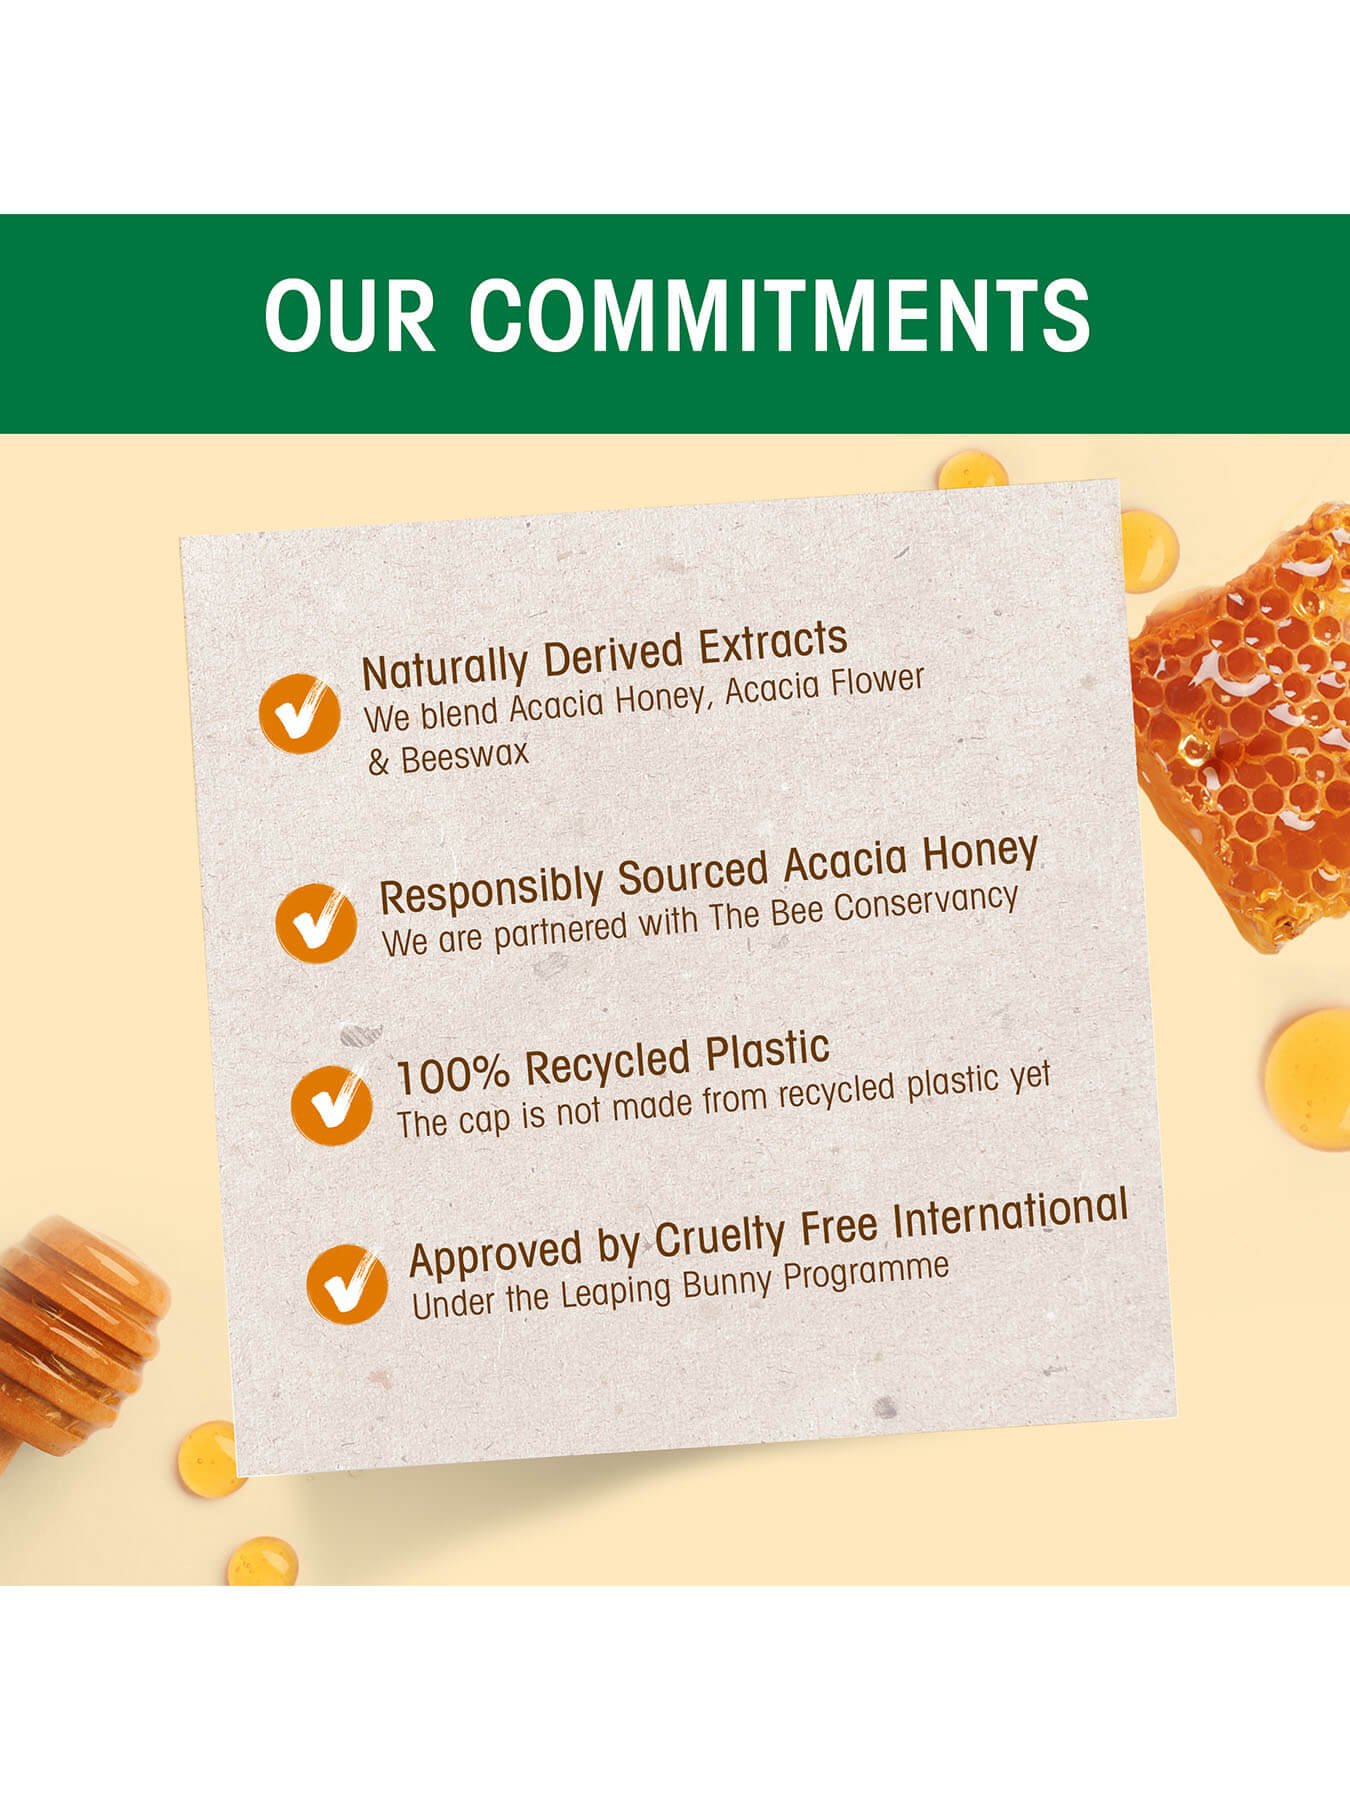 Ultimate Blends Honey Treasures commitments